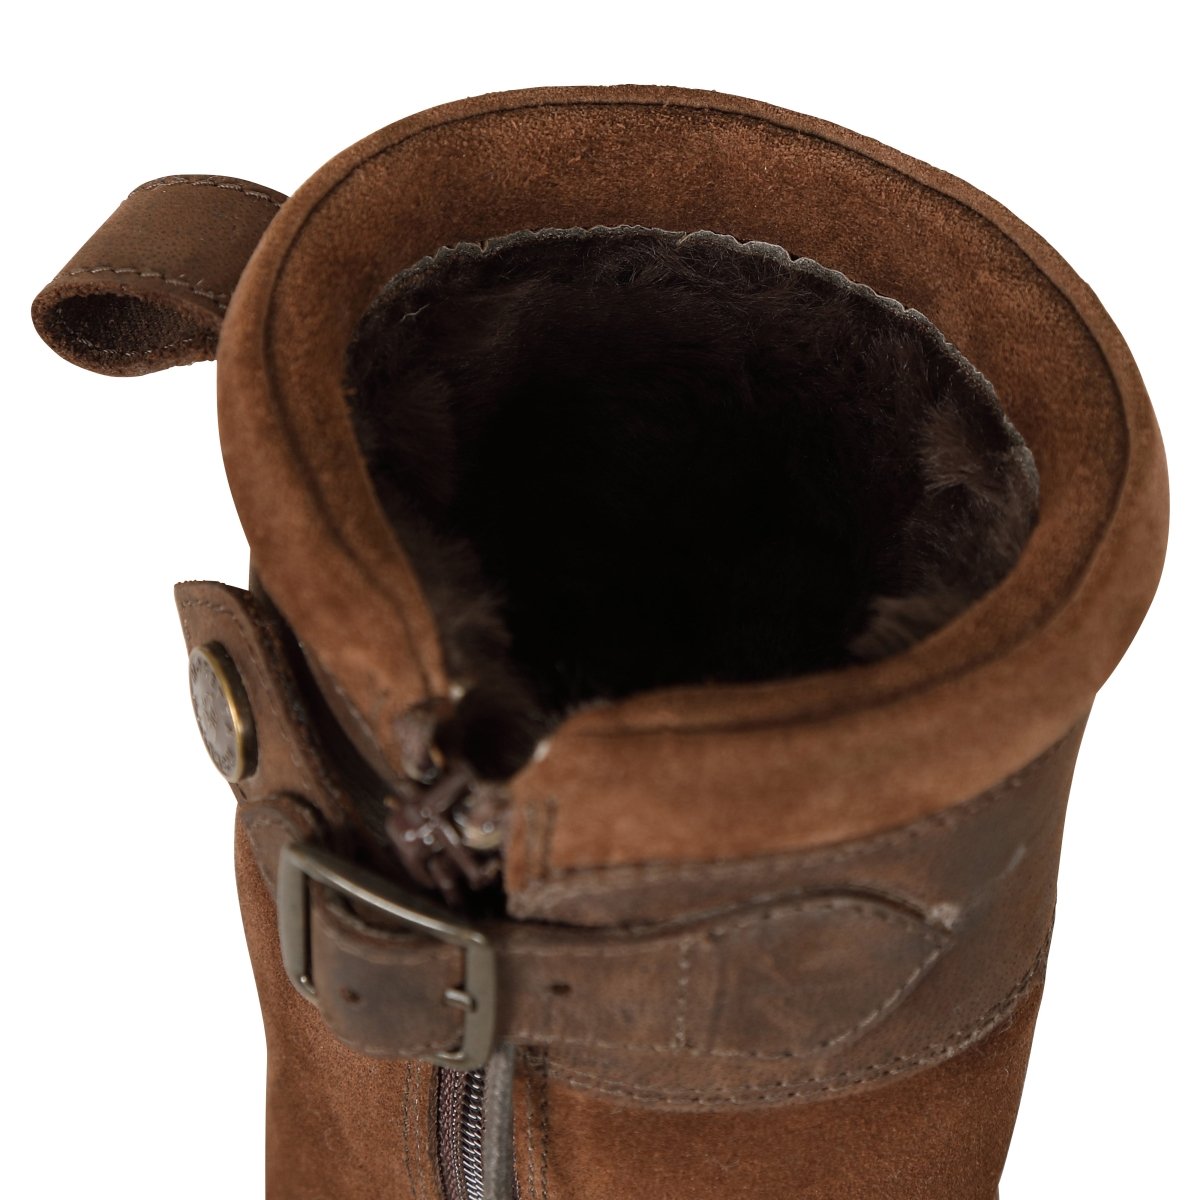 Moretta Savona Country Boots - Child - Brown - 1/33